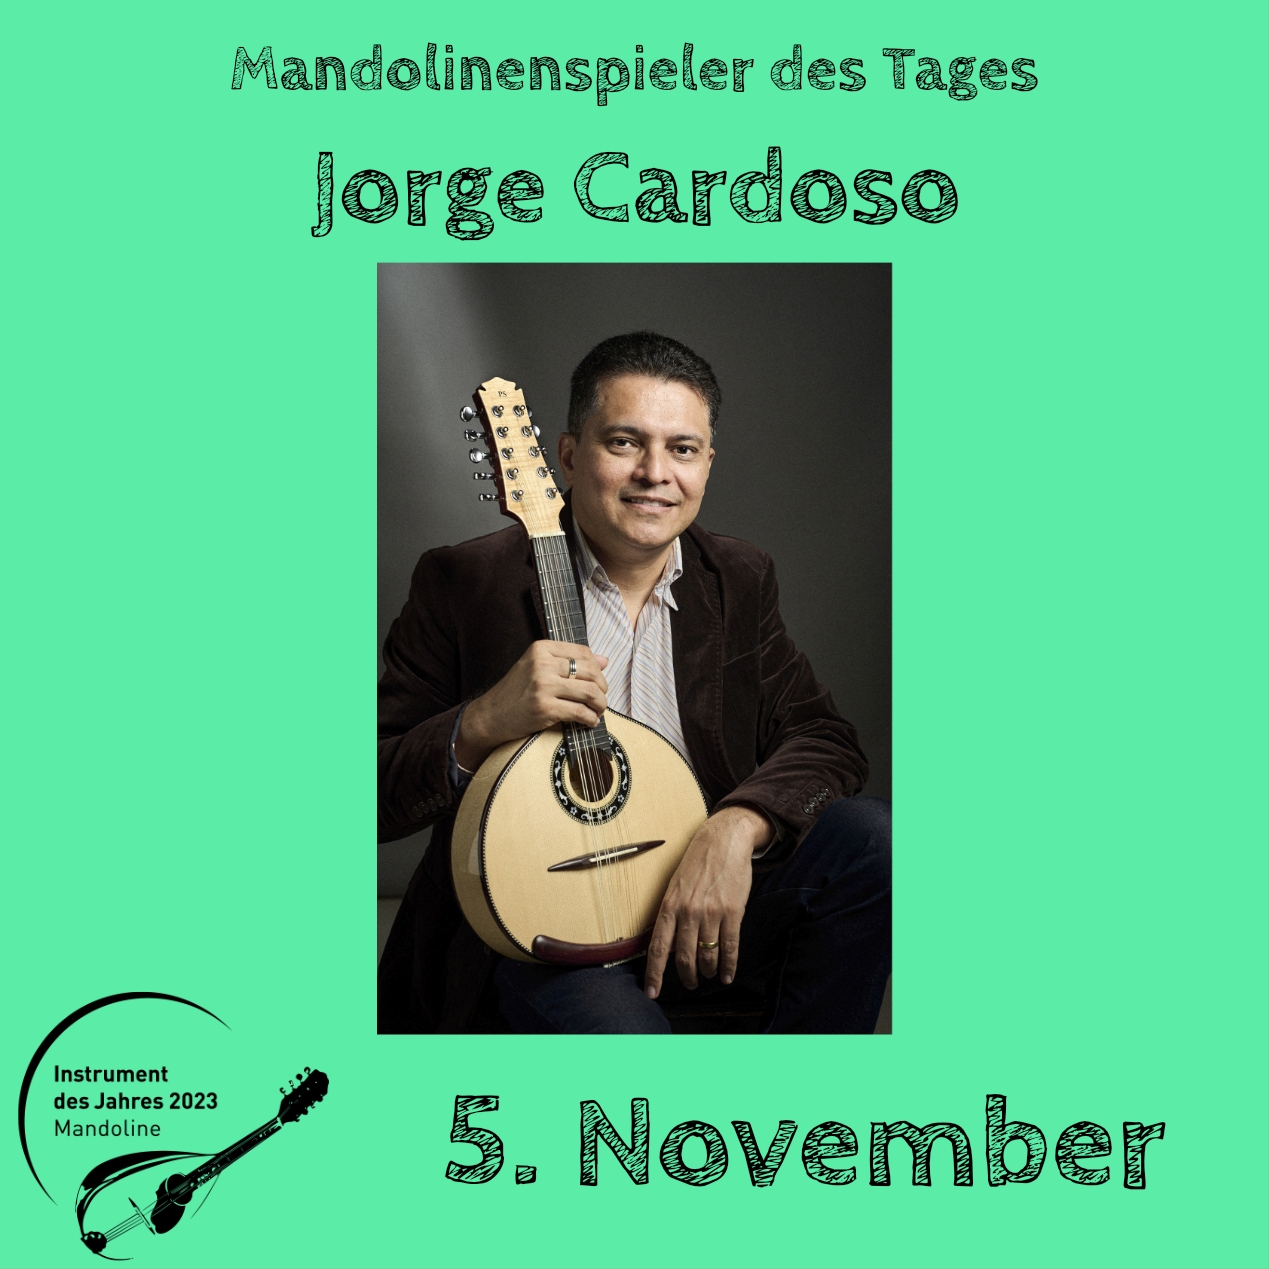 5. November - Jorge Cardoso Instrument des Jahres 2023 Mandolinenspieler Mandolinenspielerin des Tages